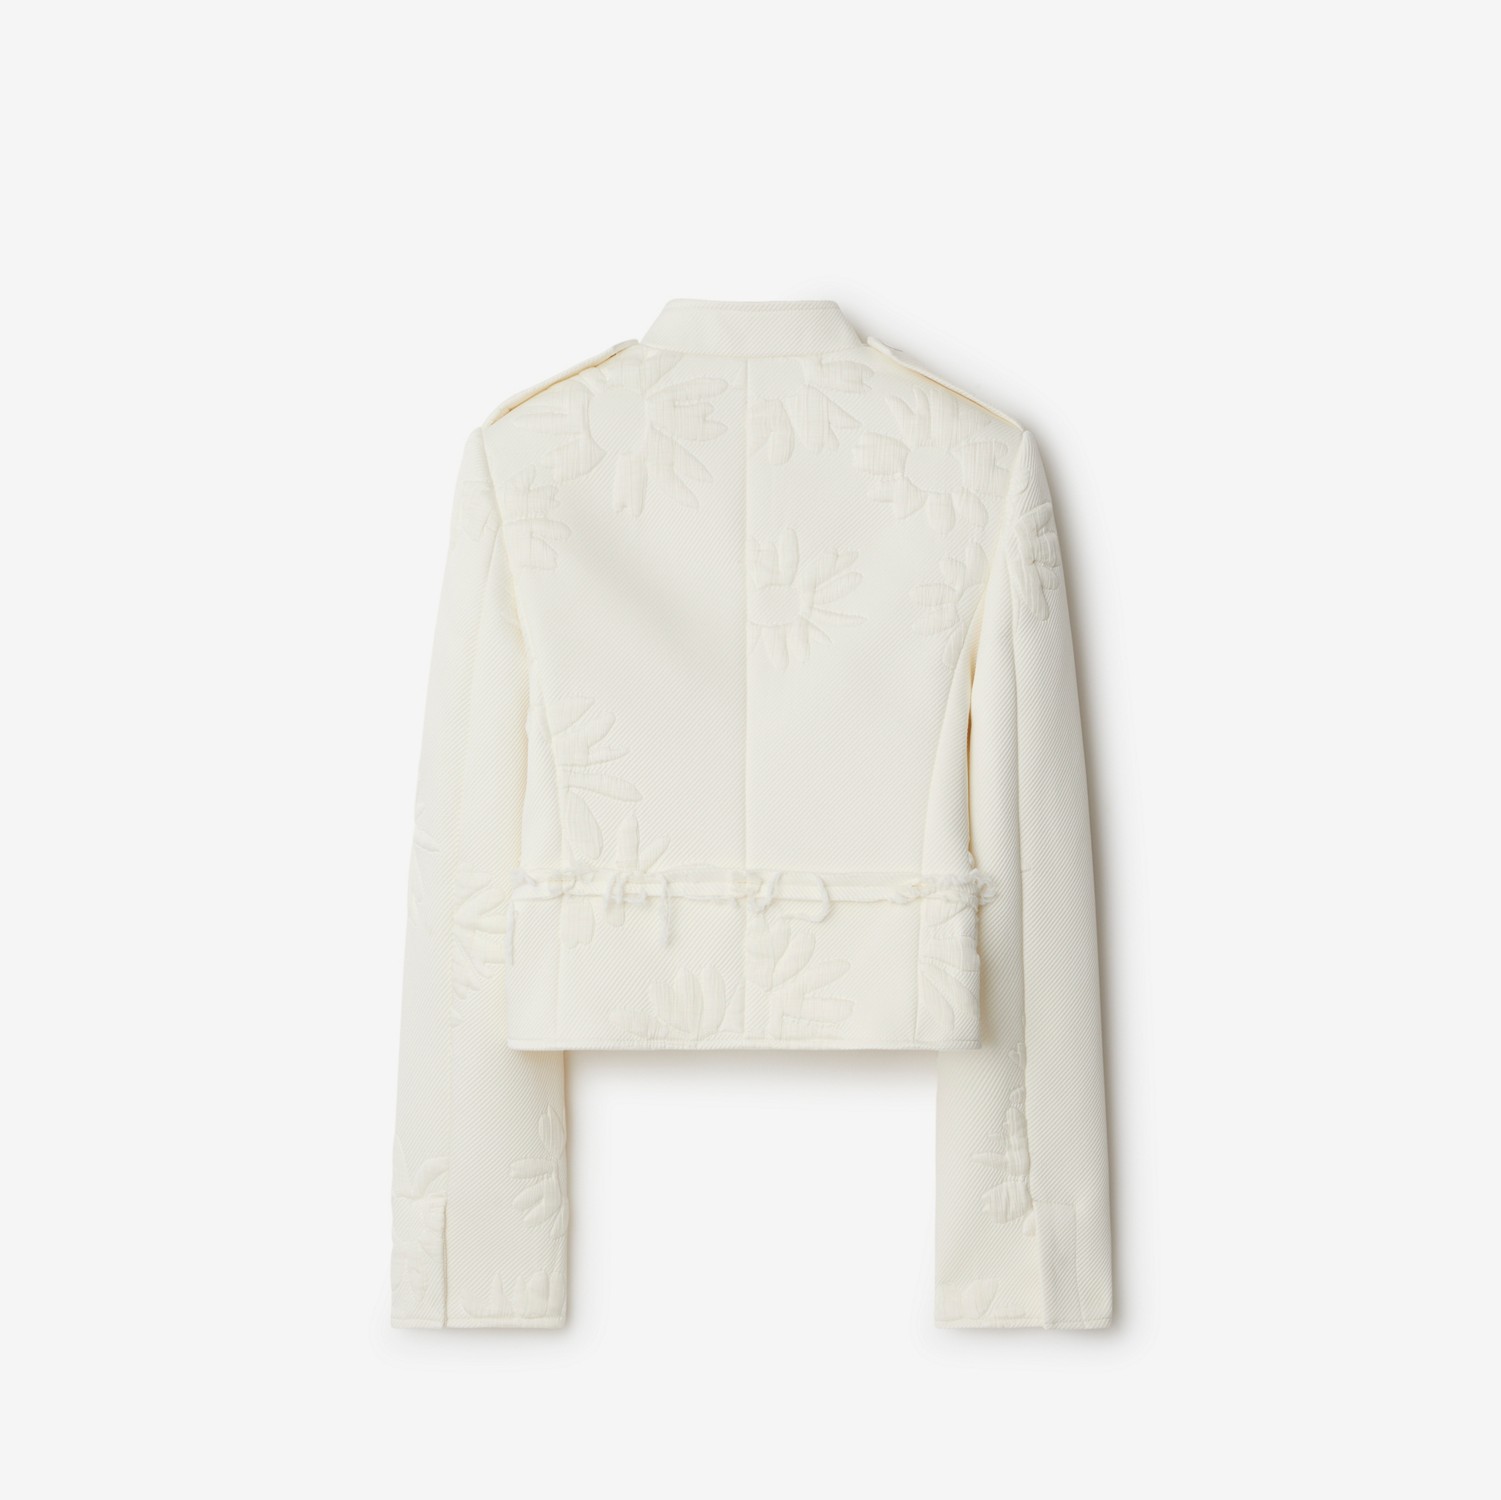 Jaqueta de alfaiataria em mescla de seda com estampa de margaridas